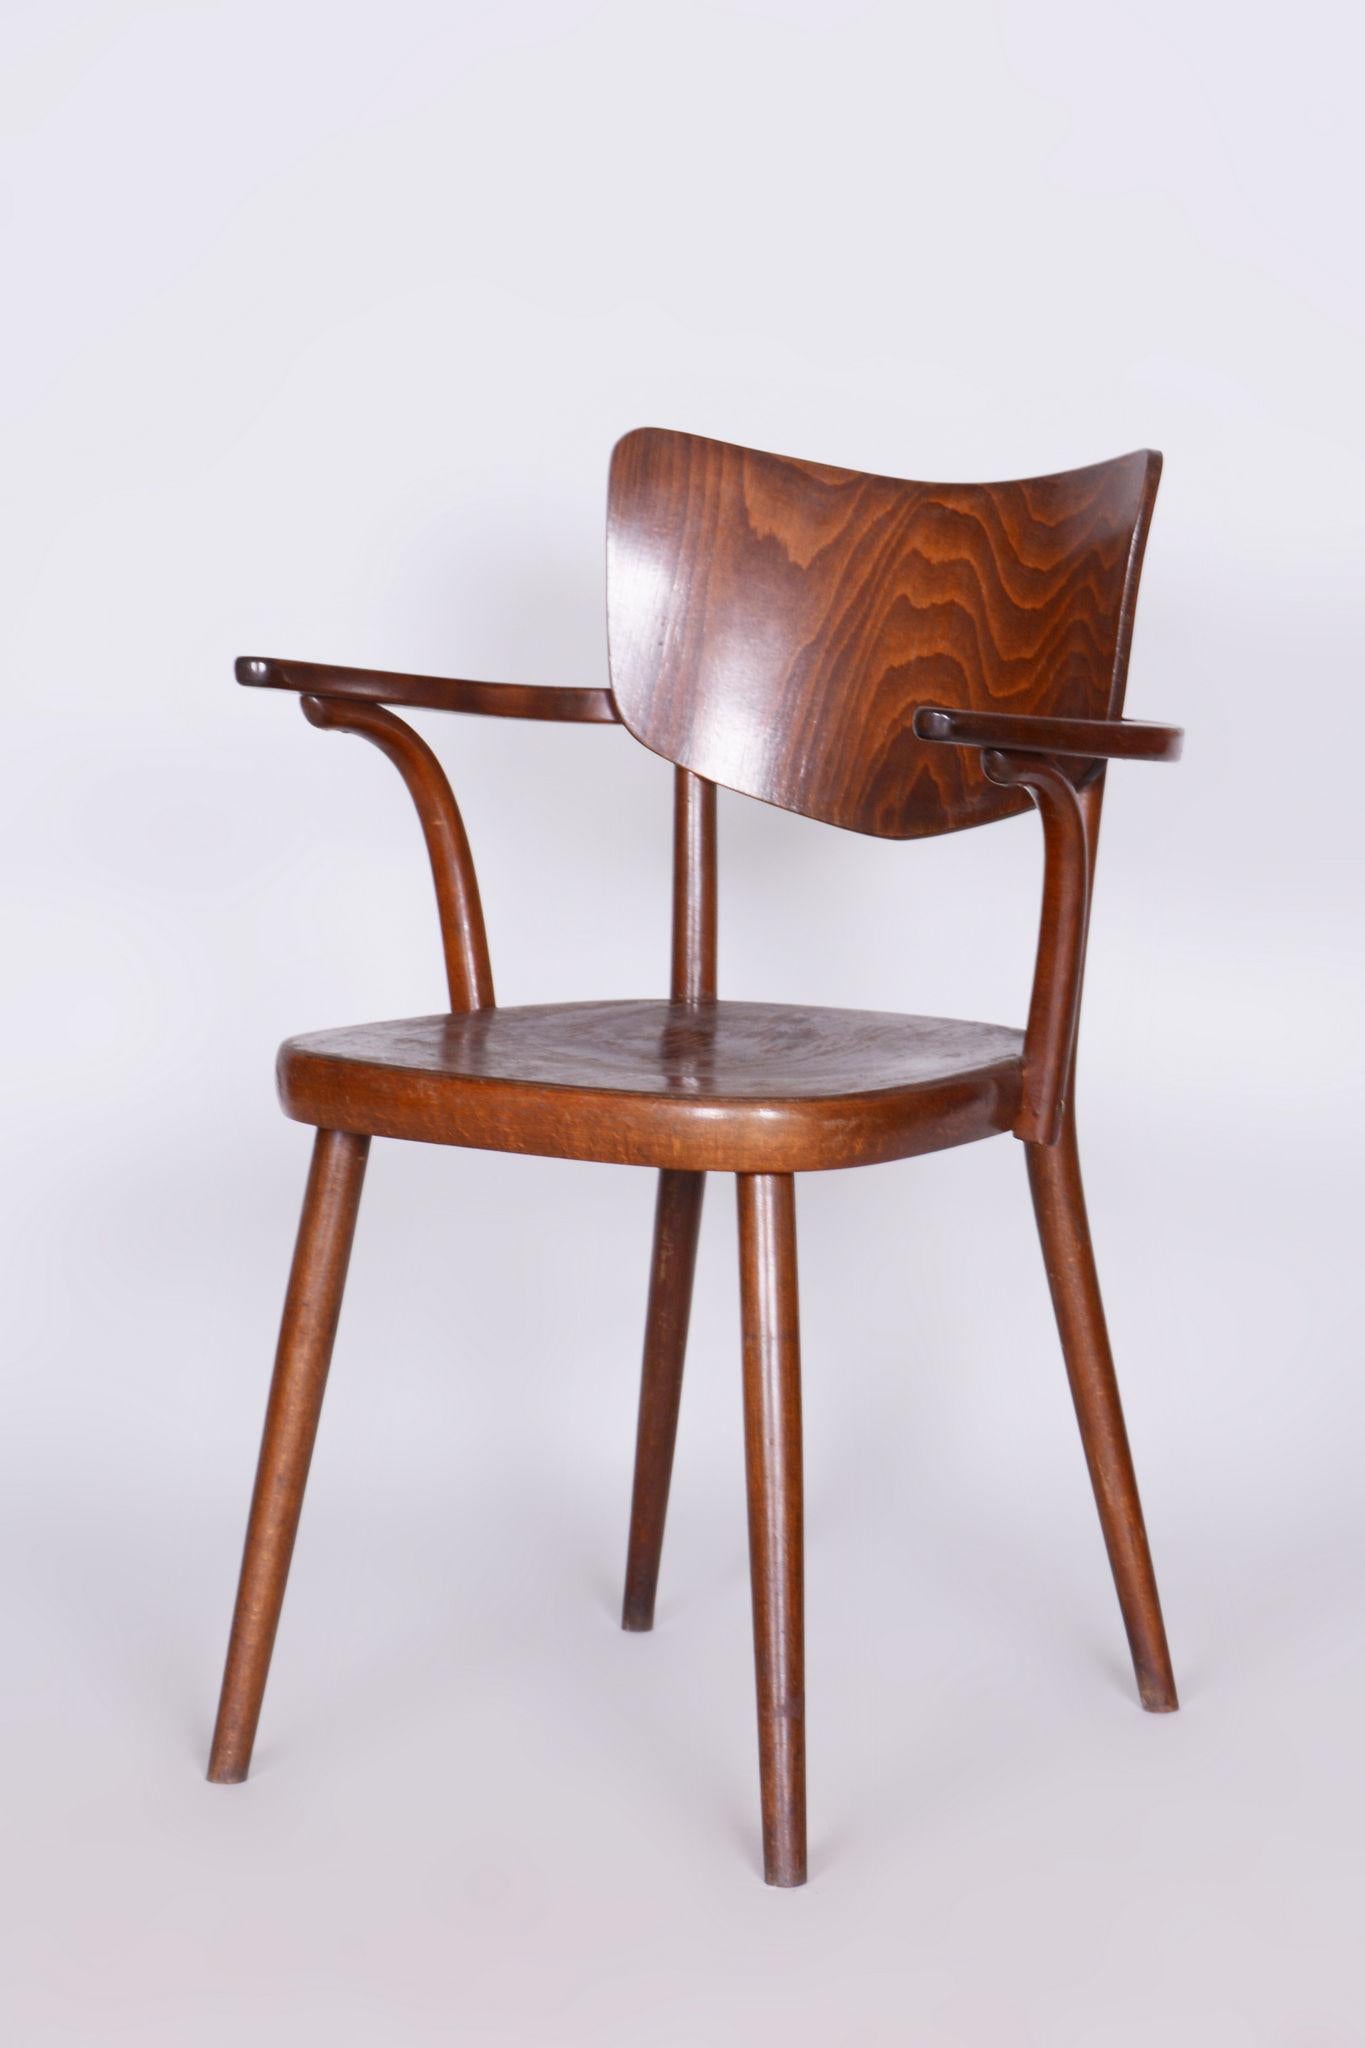 Original ArtDeco Beech Chair with Armrests by Ton, R. Hofman, Czechia, 1940s For Sale 3